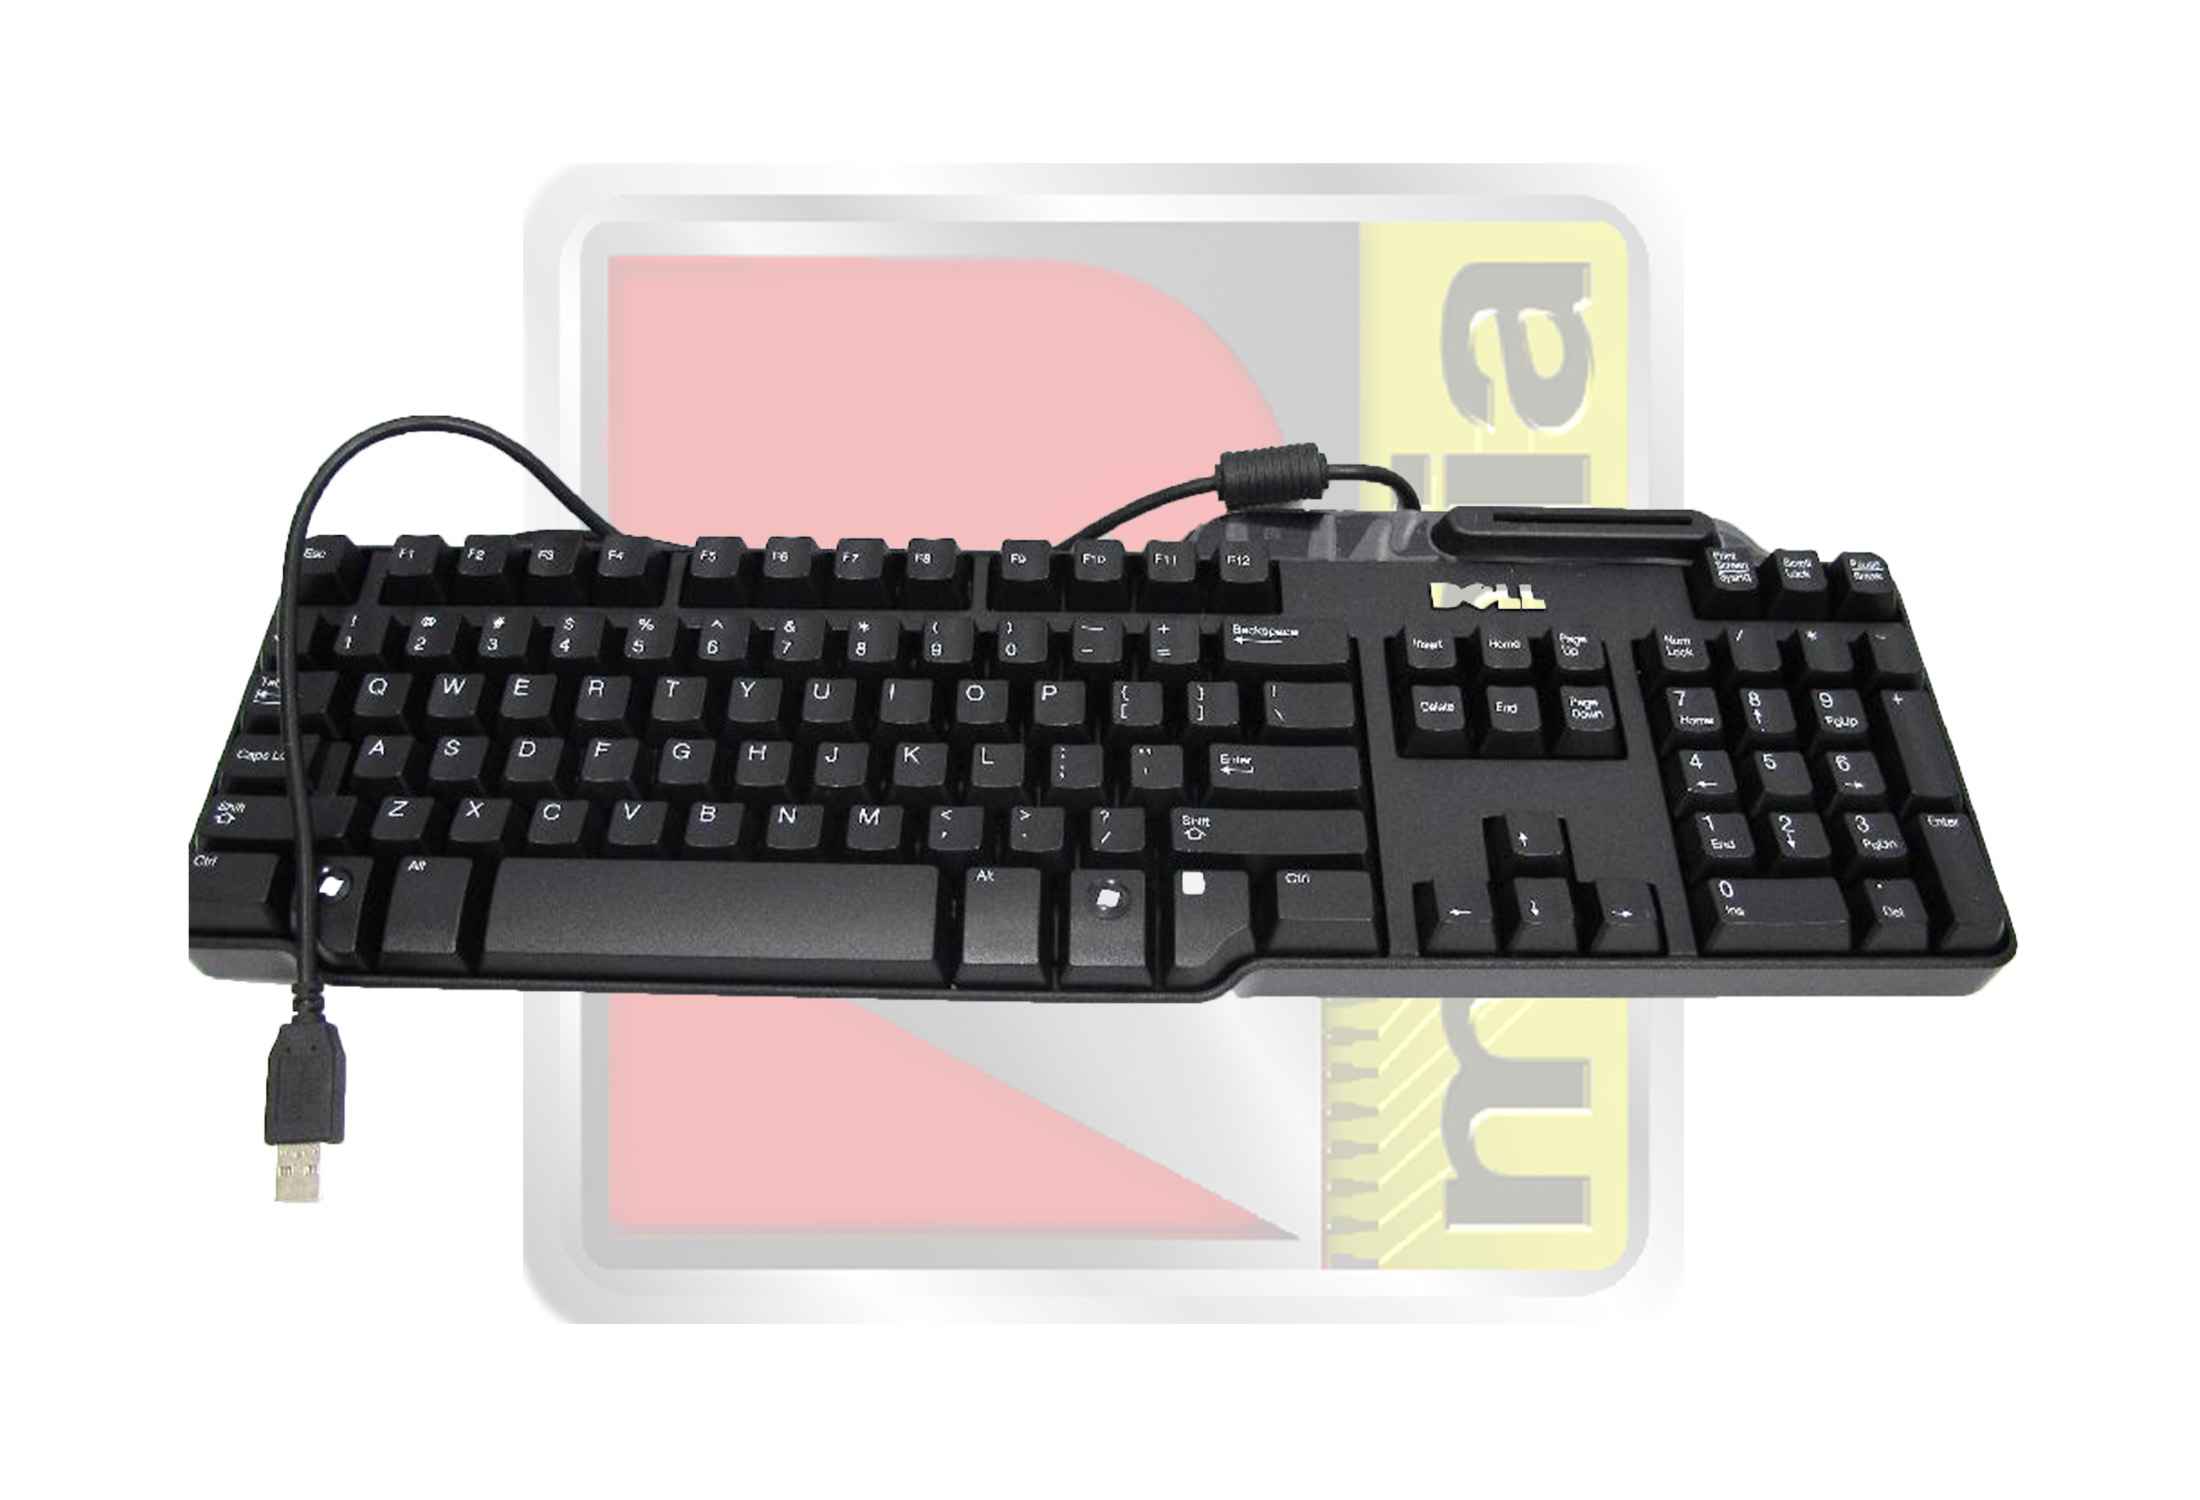 DELL SK-3205 USB SmartCard US Keyboard